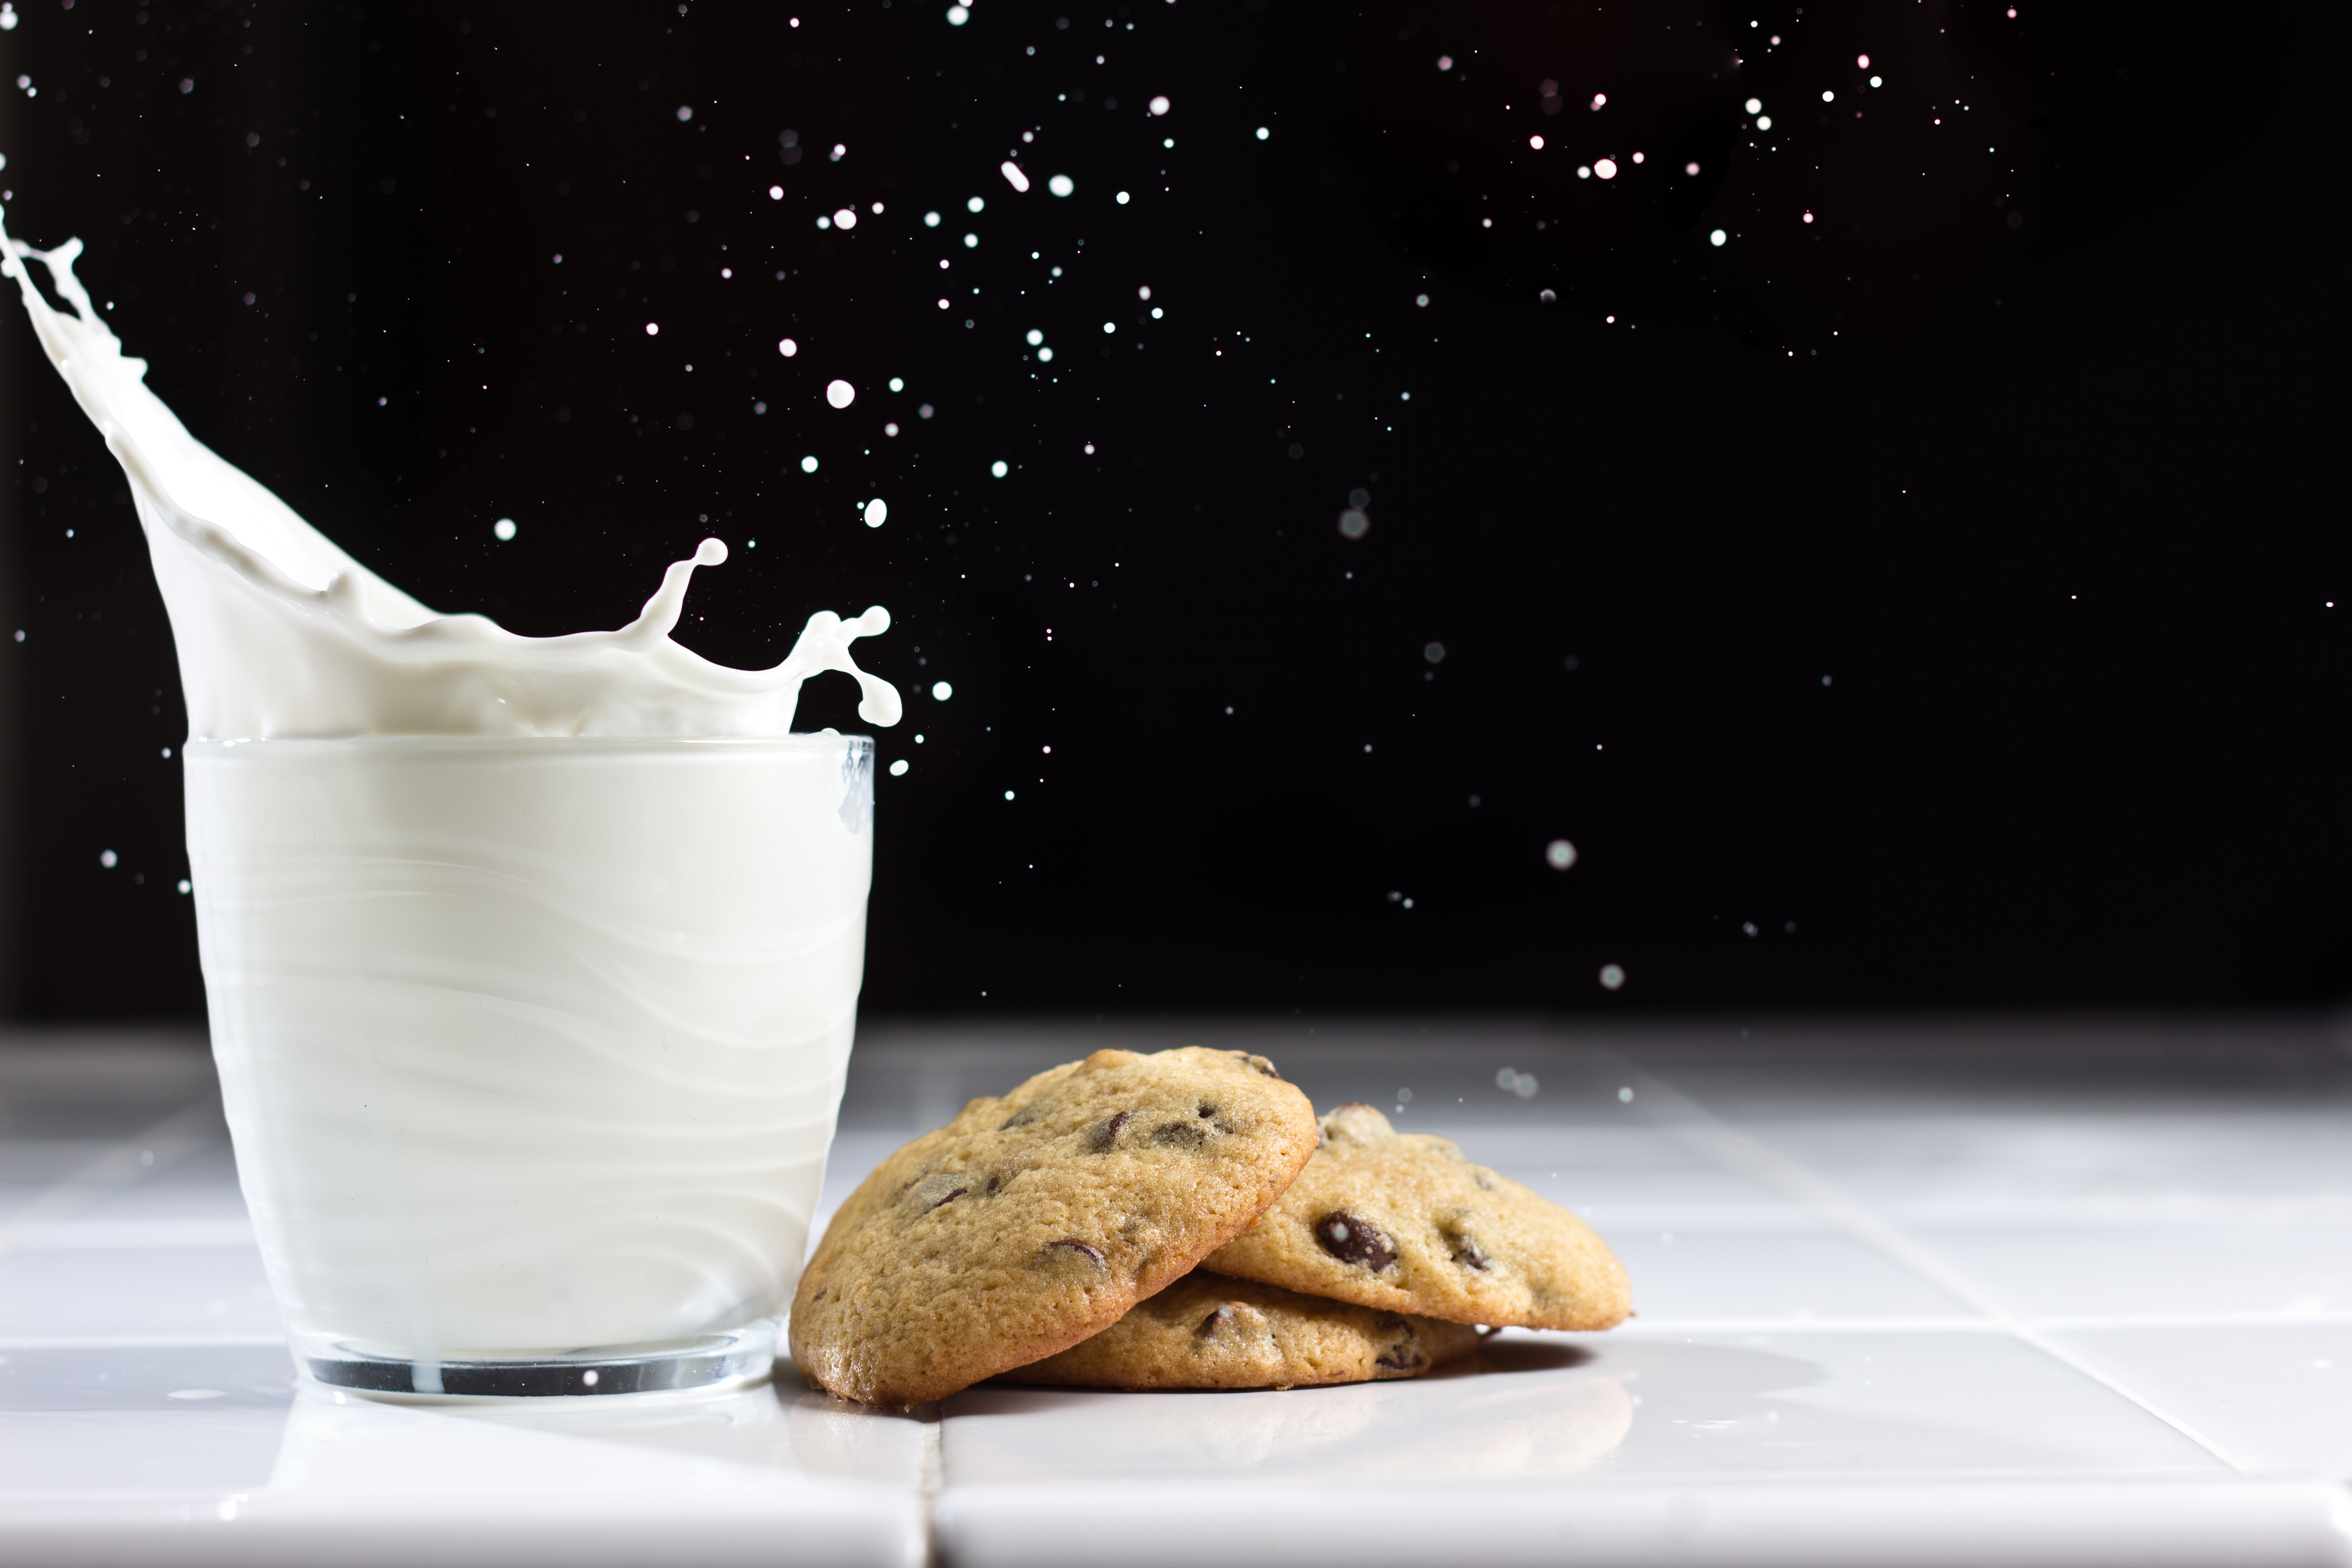 File:Cookies and milk.jpg - Wikimedia Commons